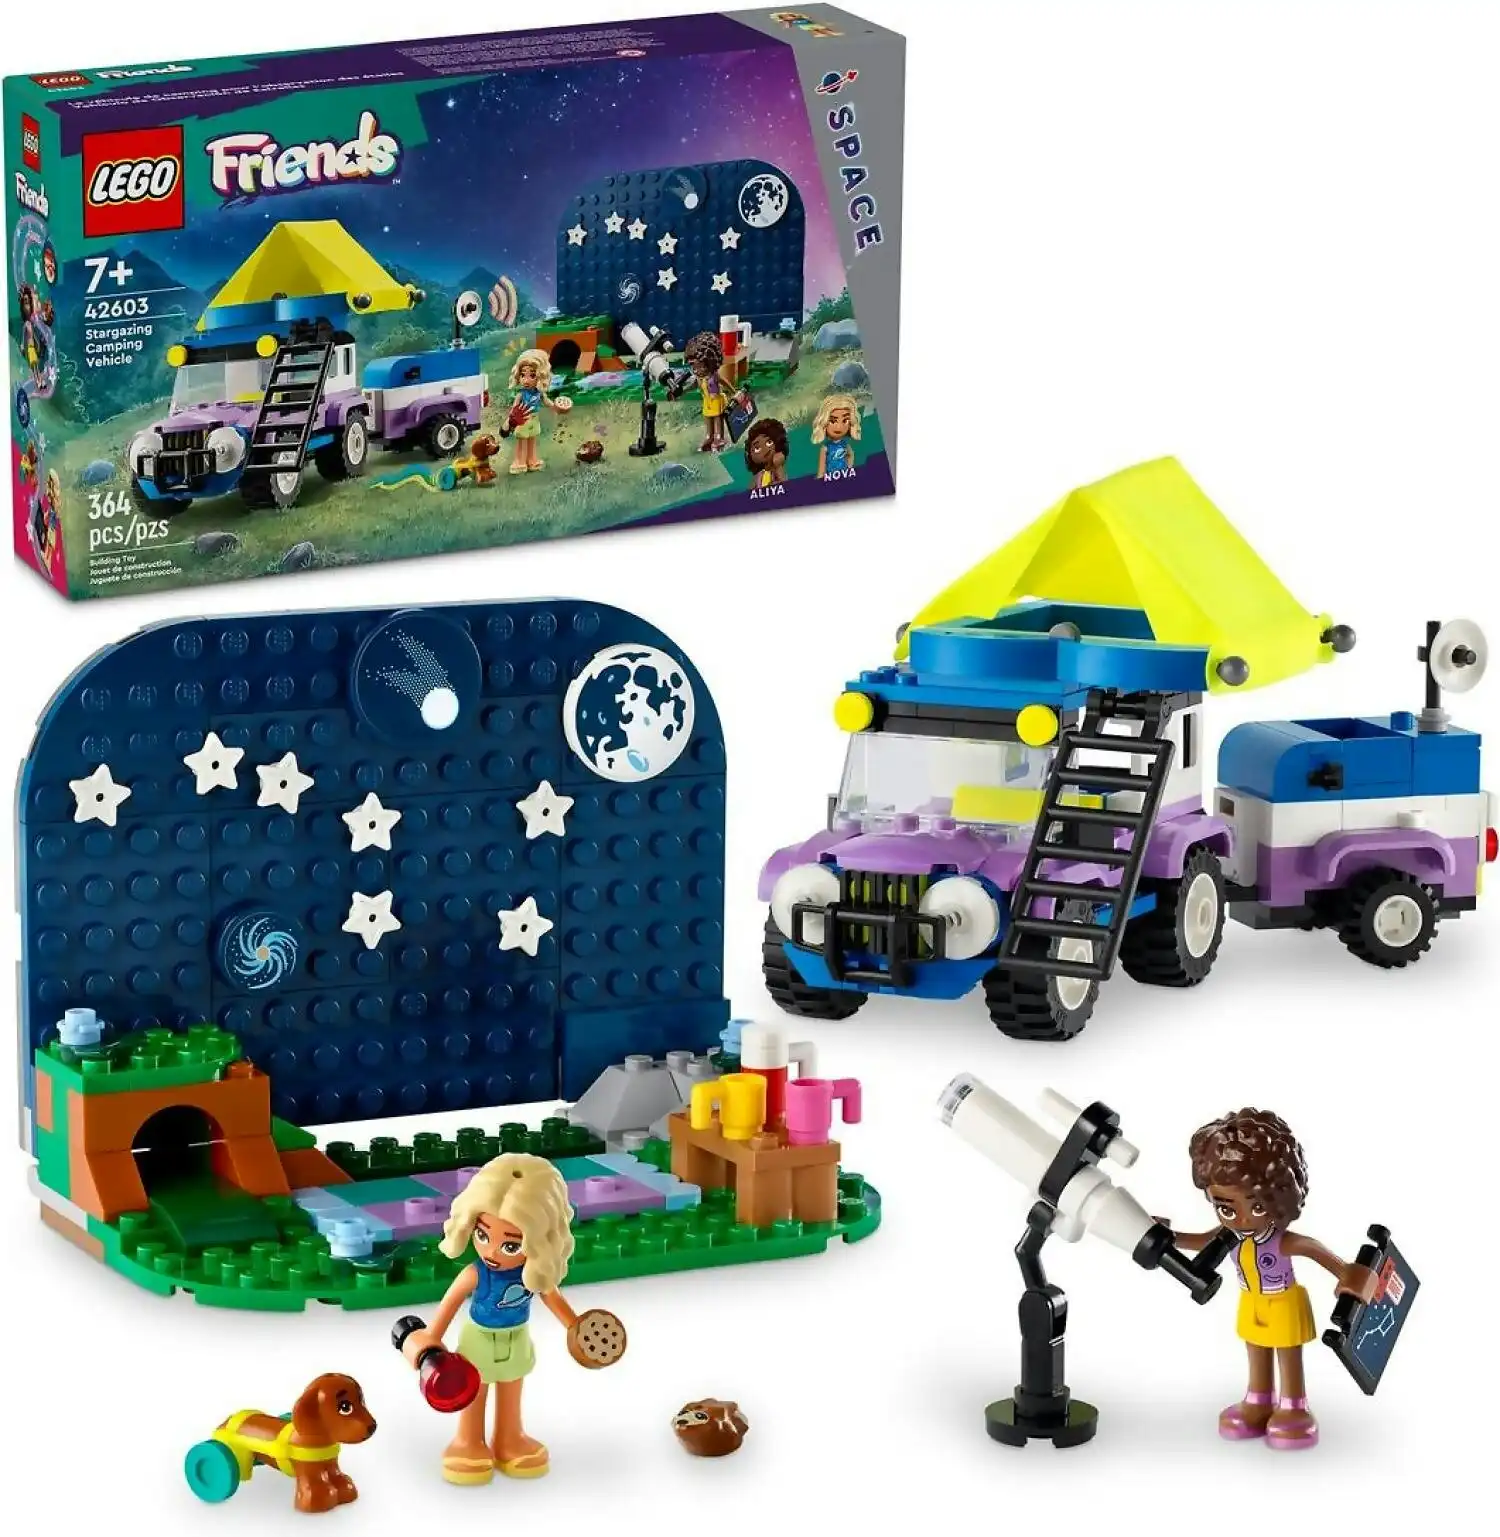 LEGO 42603 Stargazing Camping Vehicle - Friends